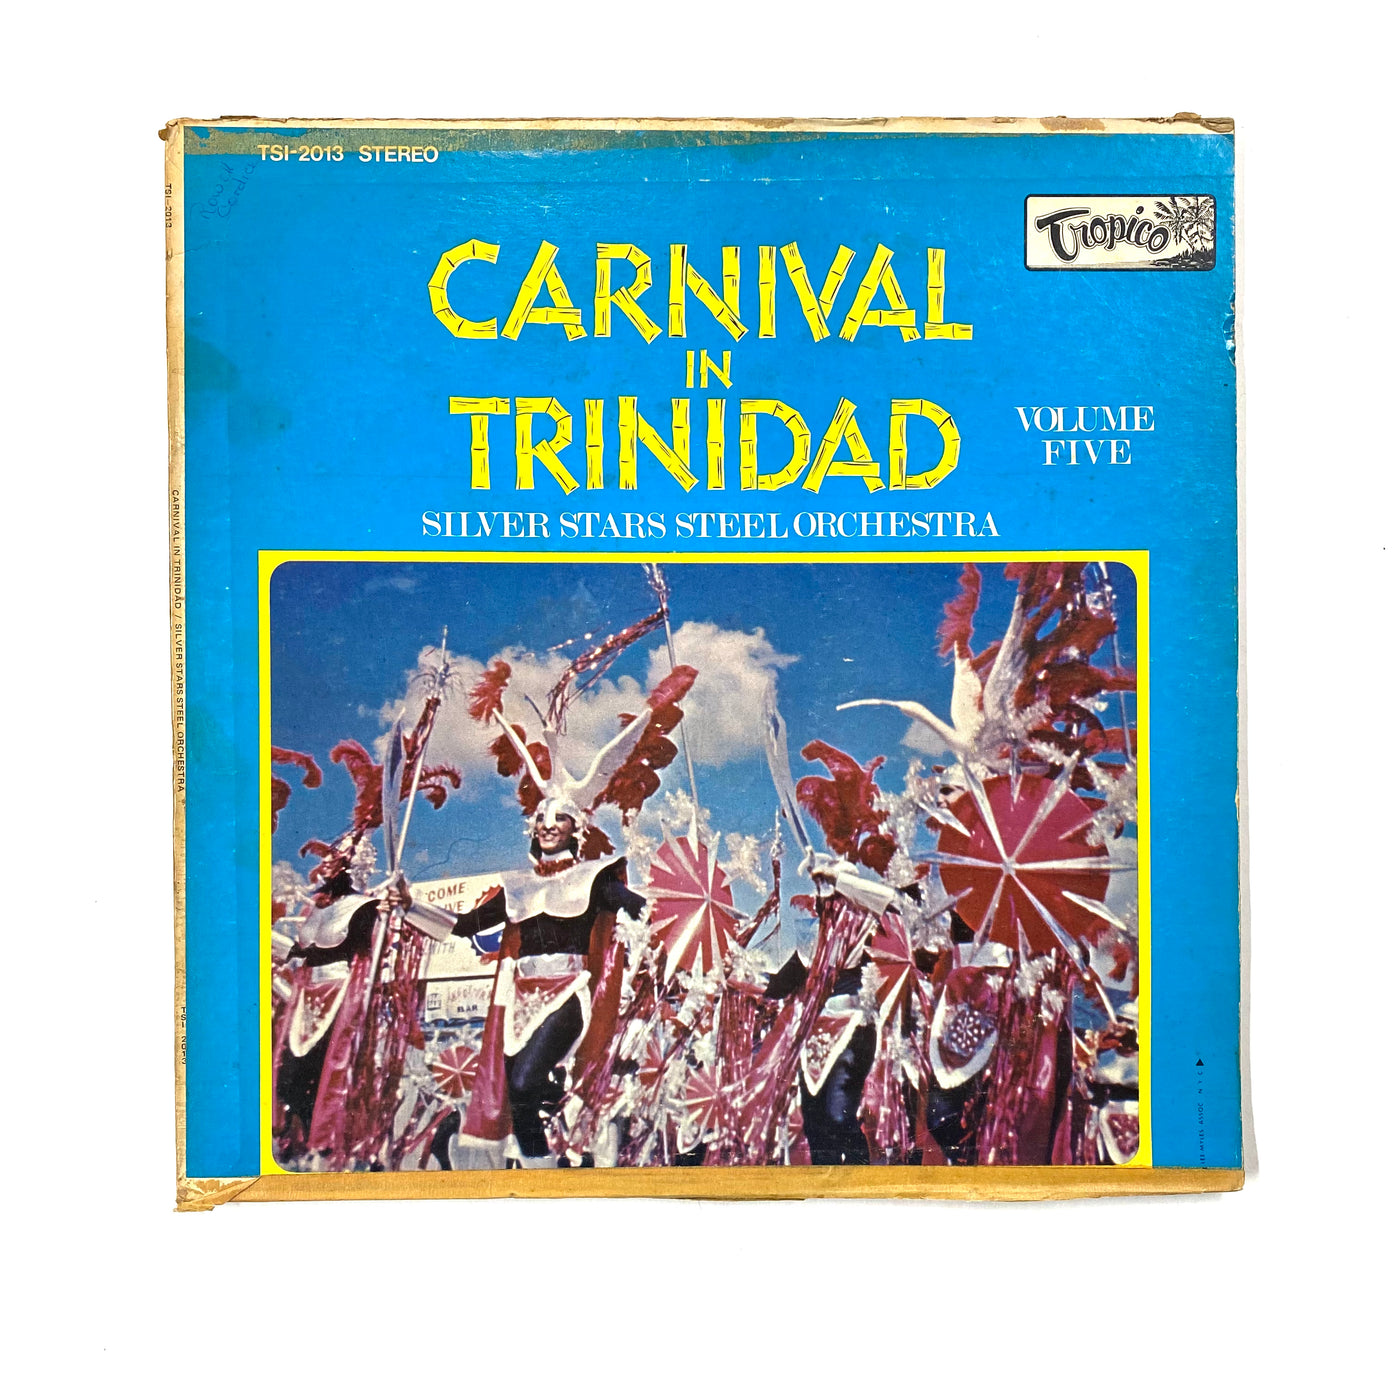 Silver Stars Steel Orchestra - Carnival In Trinidad (Volume 5)